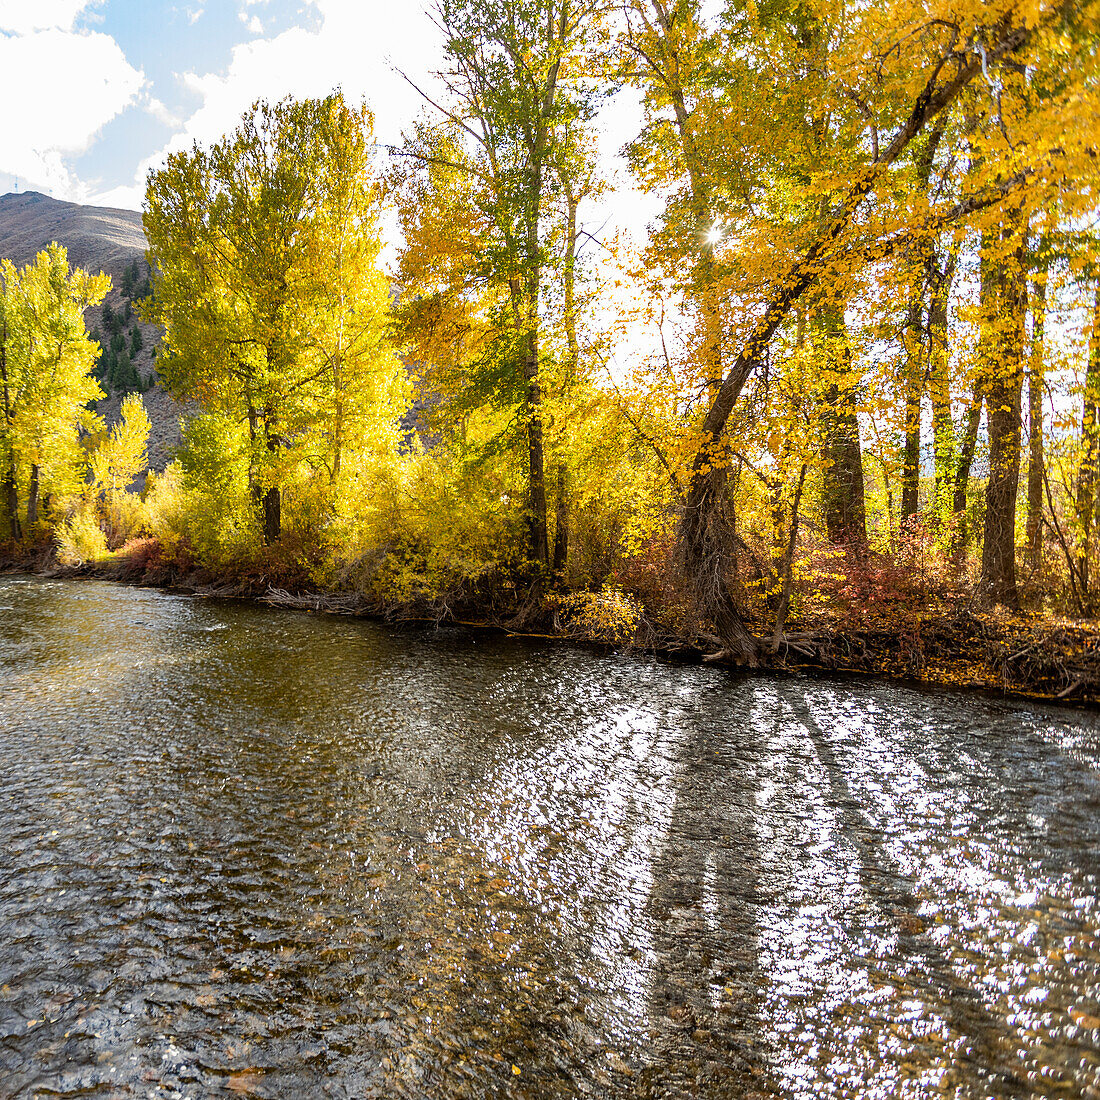 USA, Idaho, Hailey, River and yellow trees in Autumn